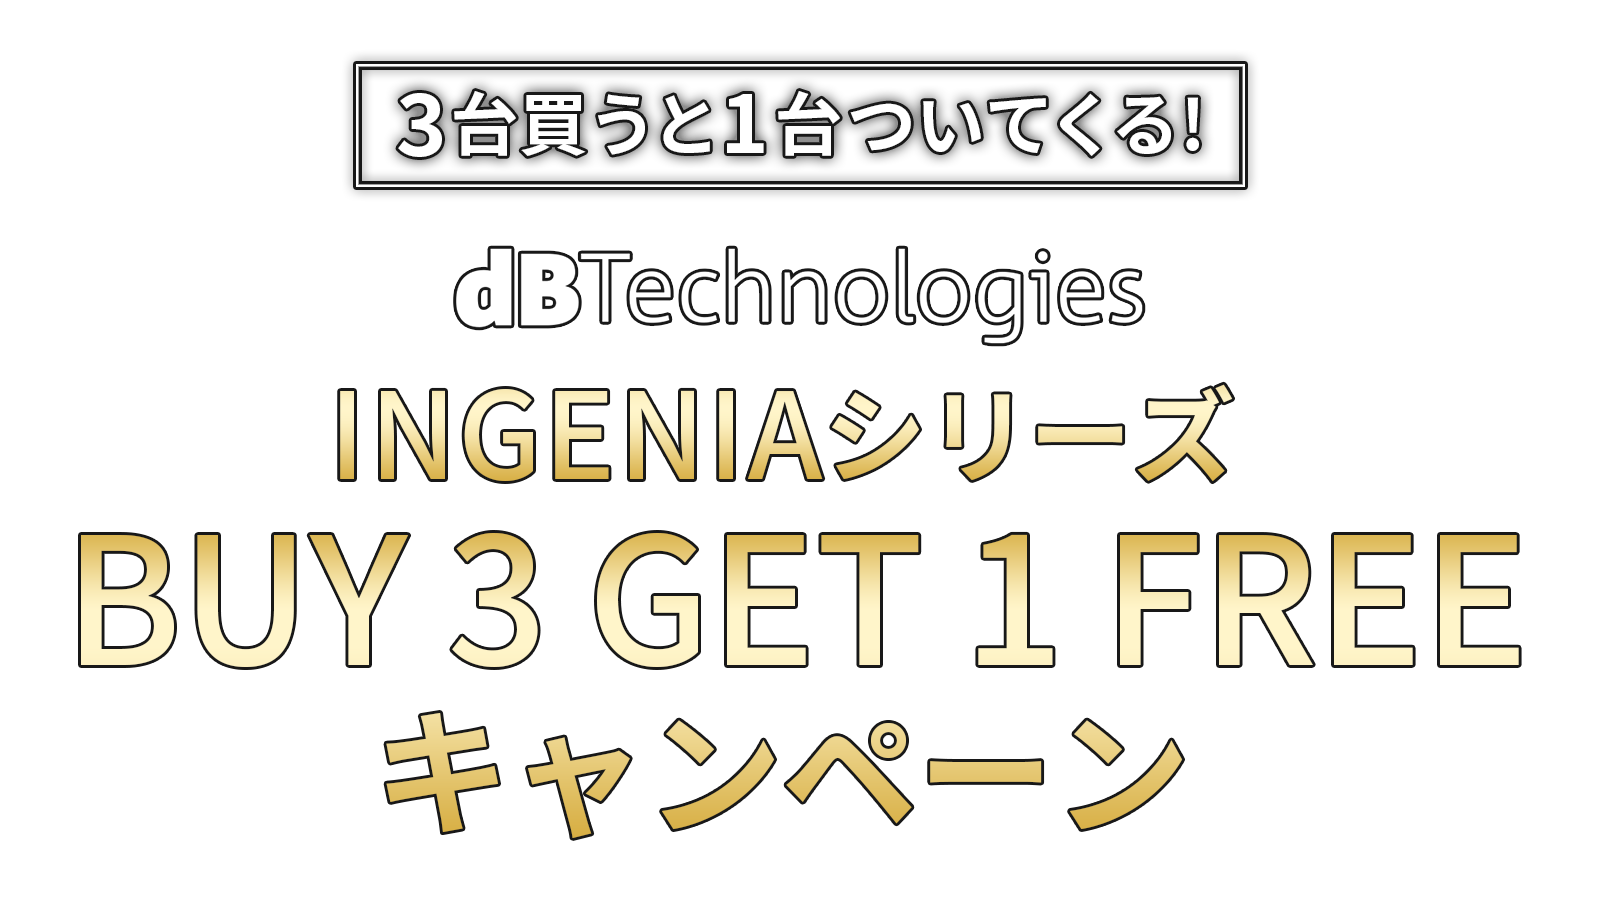 dBTechnologies INGENIAシリーズ BUY 3 GET 1 FREE キャンペーン